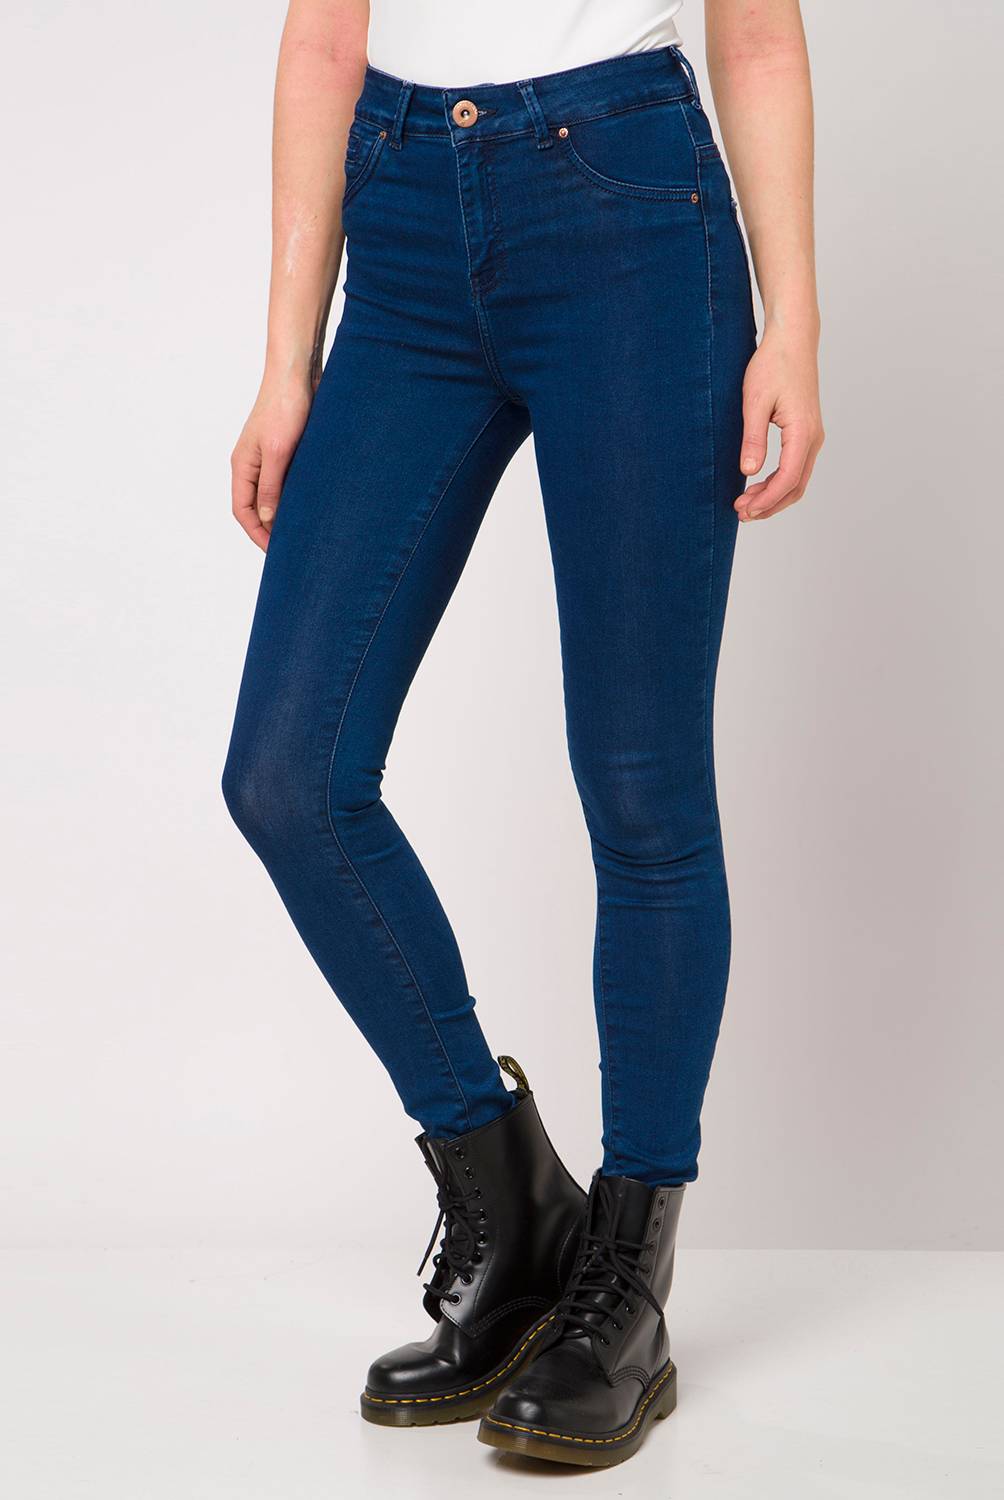 AMERICANINO - Jeans Tiro Medio Mujer